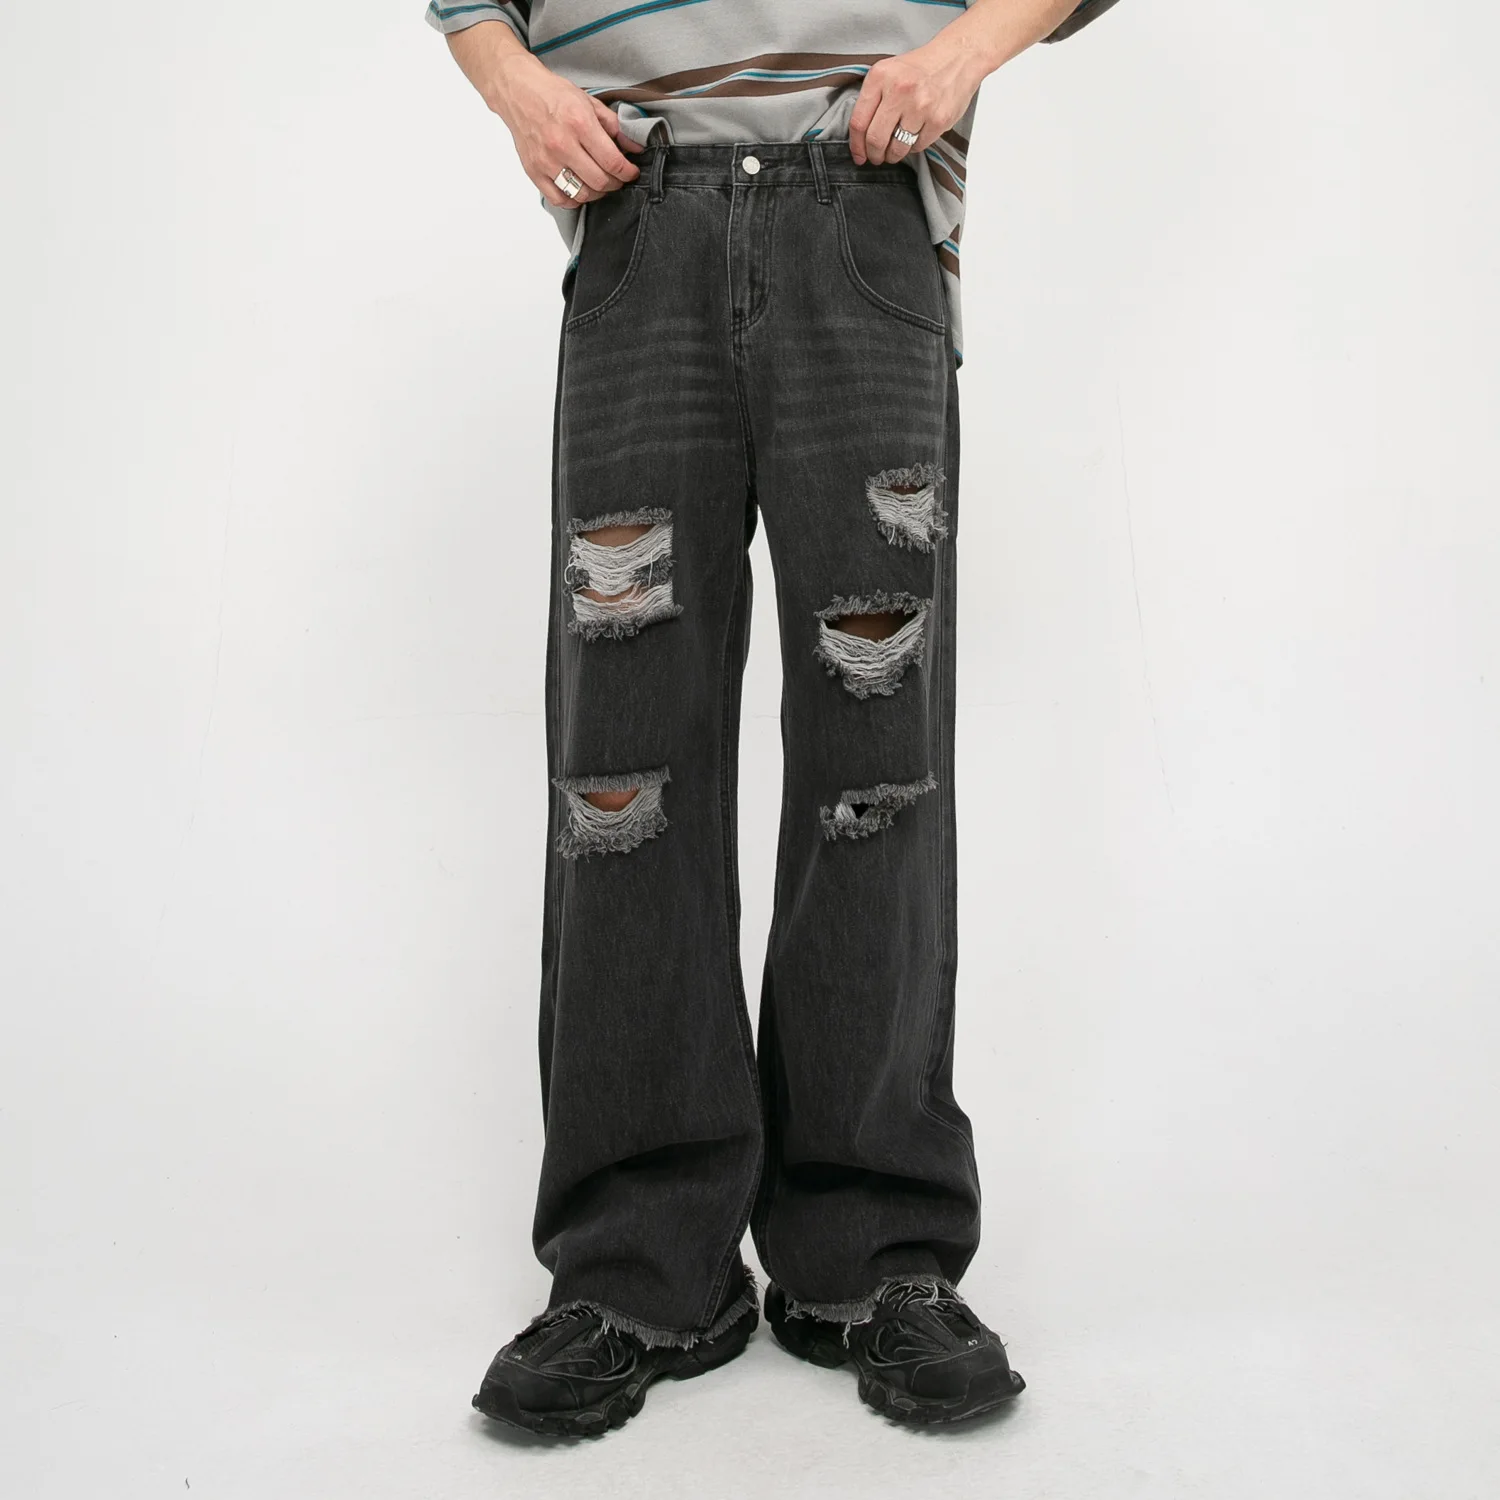 Jeans Men Straight Loose Casual Distressed Hole Wide Leg Denim Pants Man Korean Streetwear Fashion Hipster Vintage Jeans Trouser